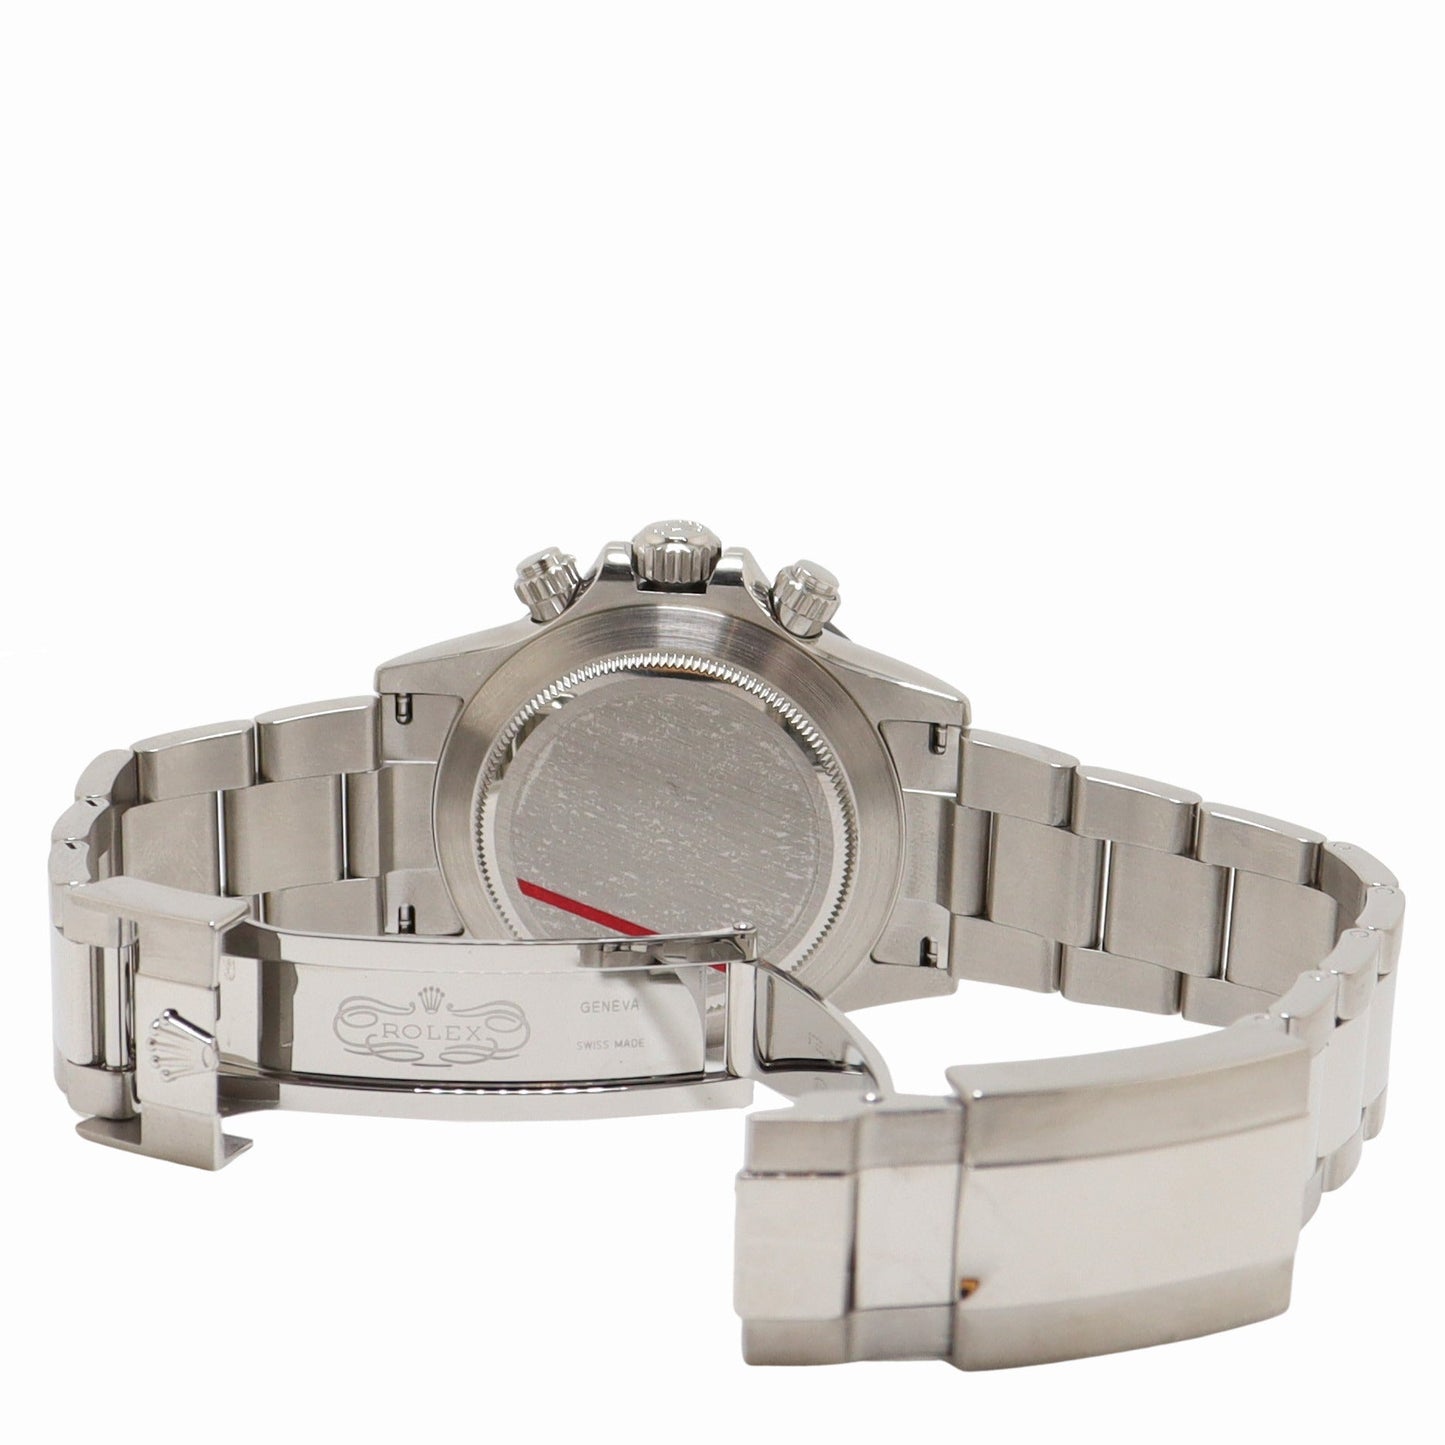 Rolex Daytona Stainless Steel 40mm White Chronograph Dial Watch Reference #: 116500LN - Happy Jewelers Fine Jewelry Lifetime Warranty